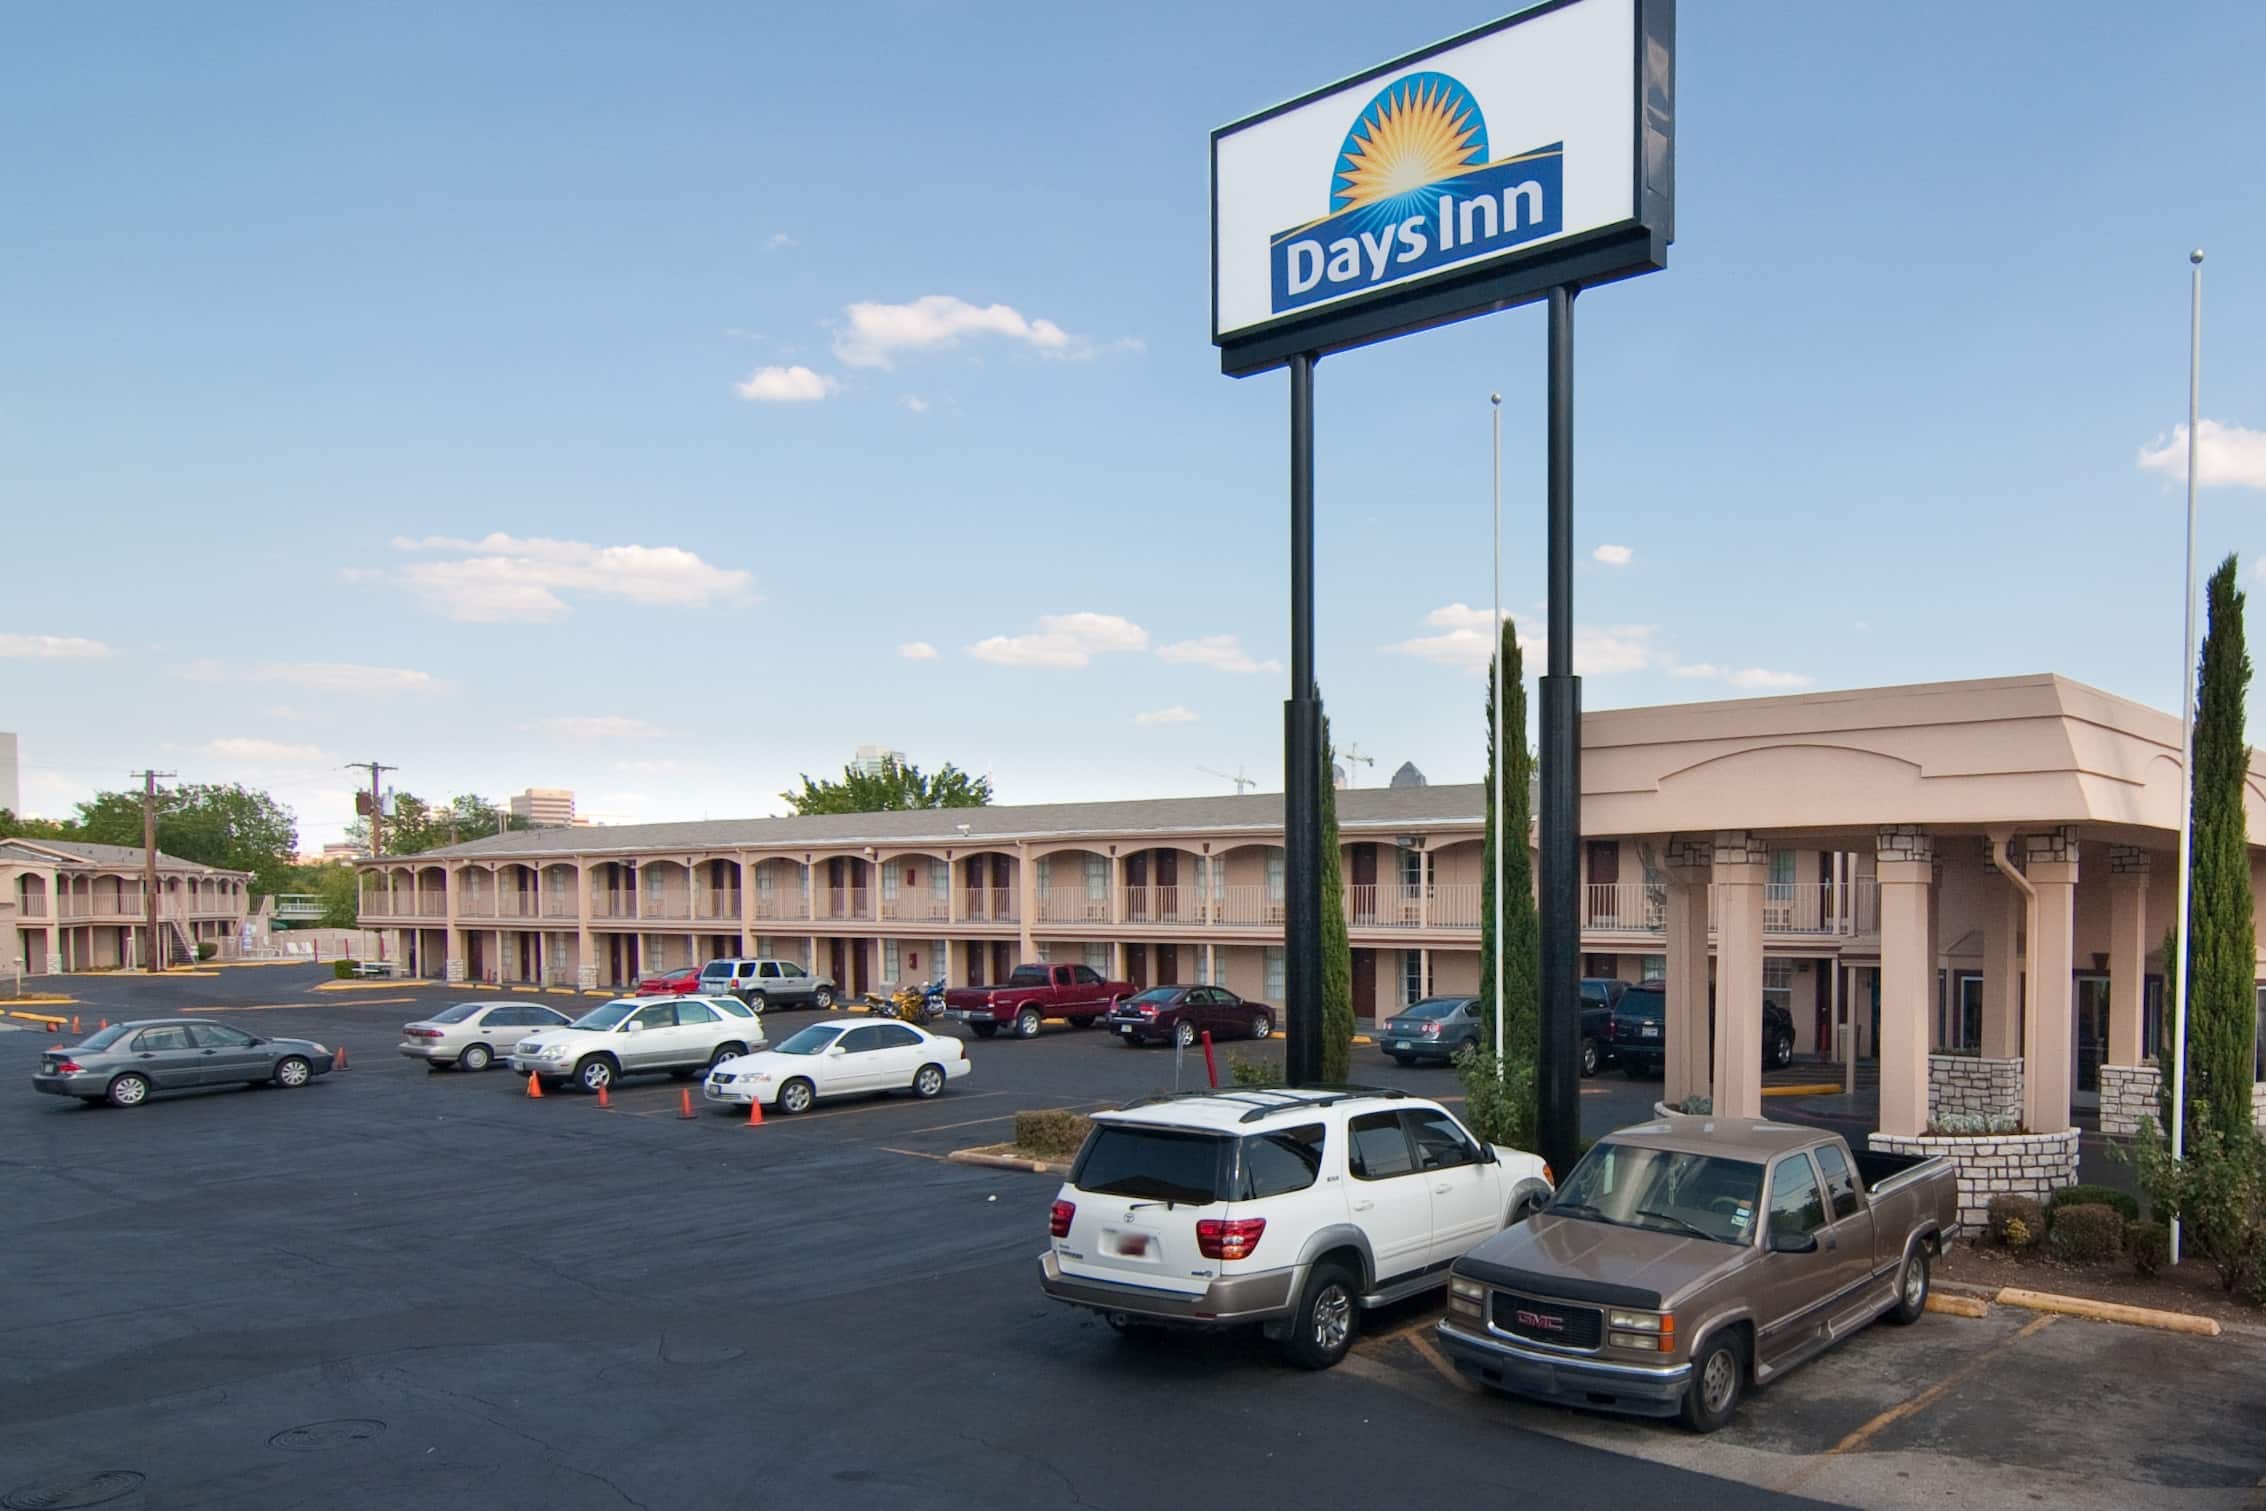 Days Inn by Wyndham Market Center Dallas Love Field Dallas, TX Hotels